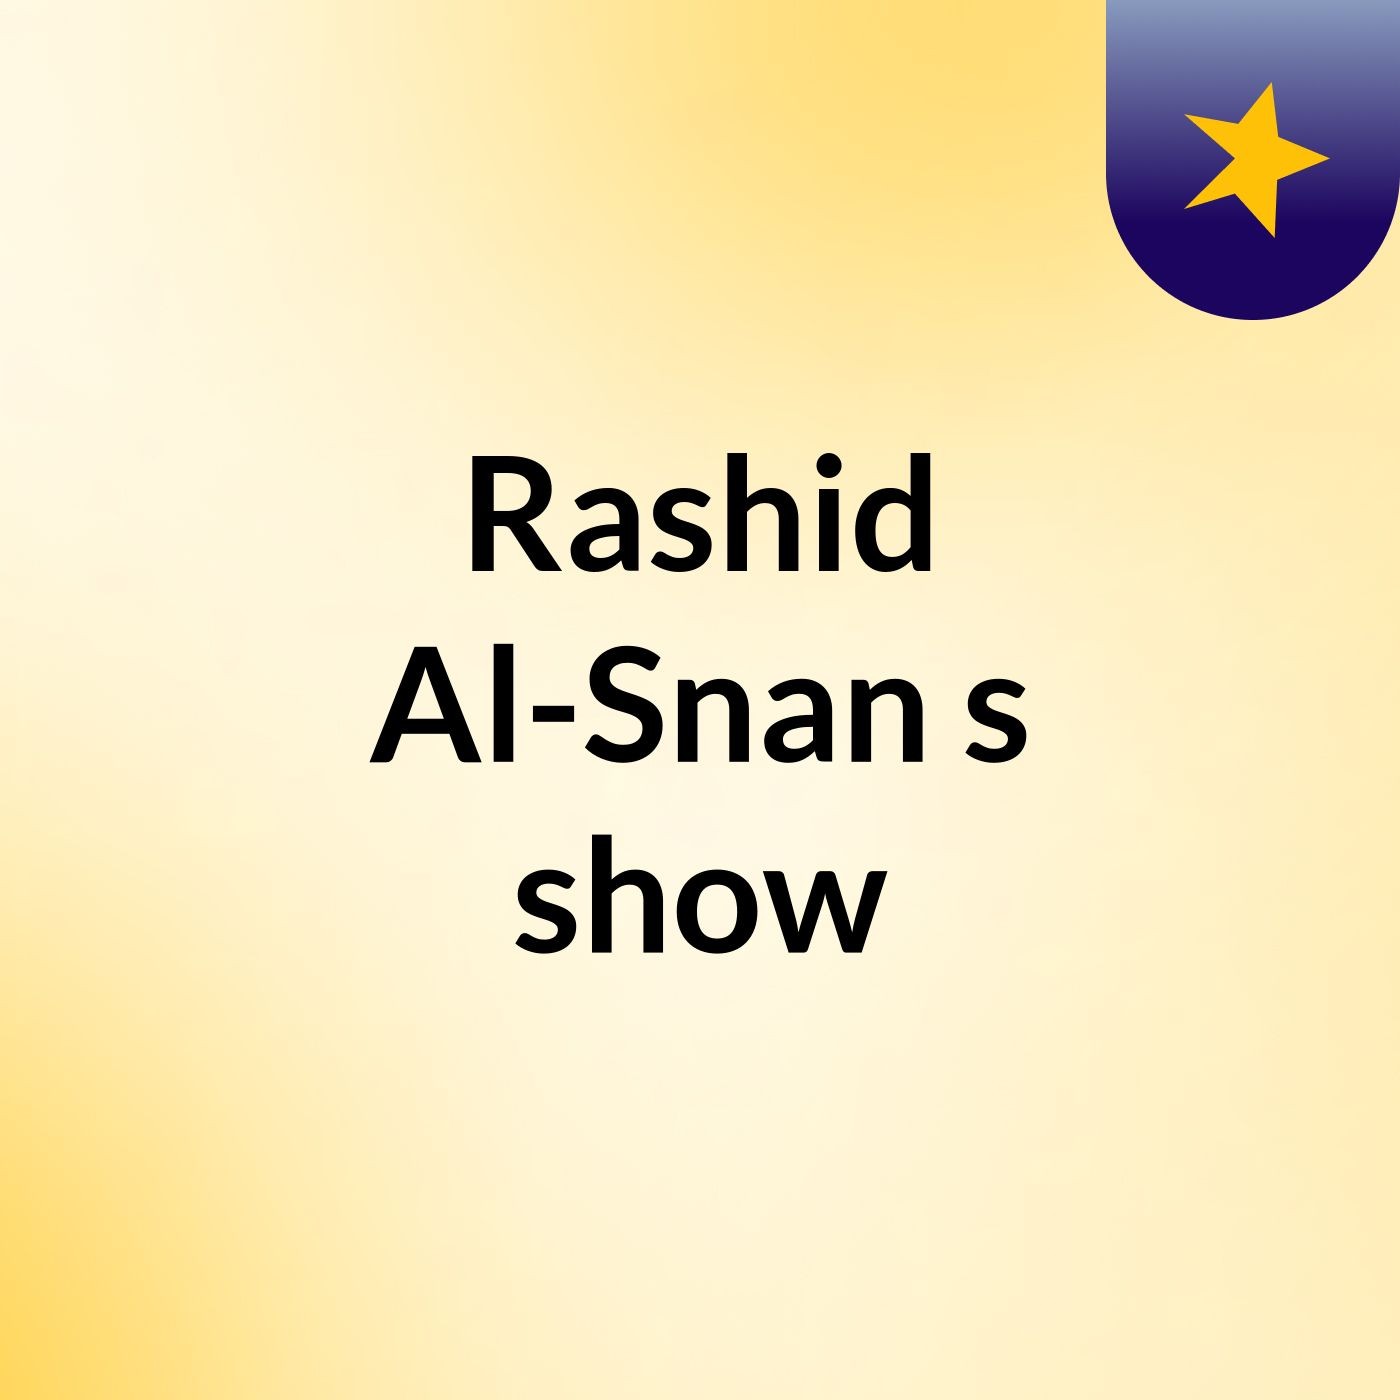 Rashid Al-Snan's show